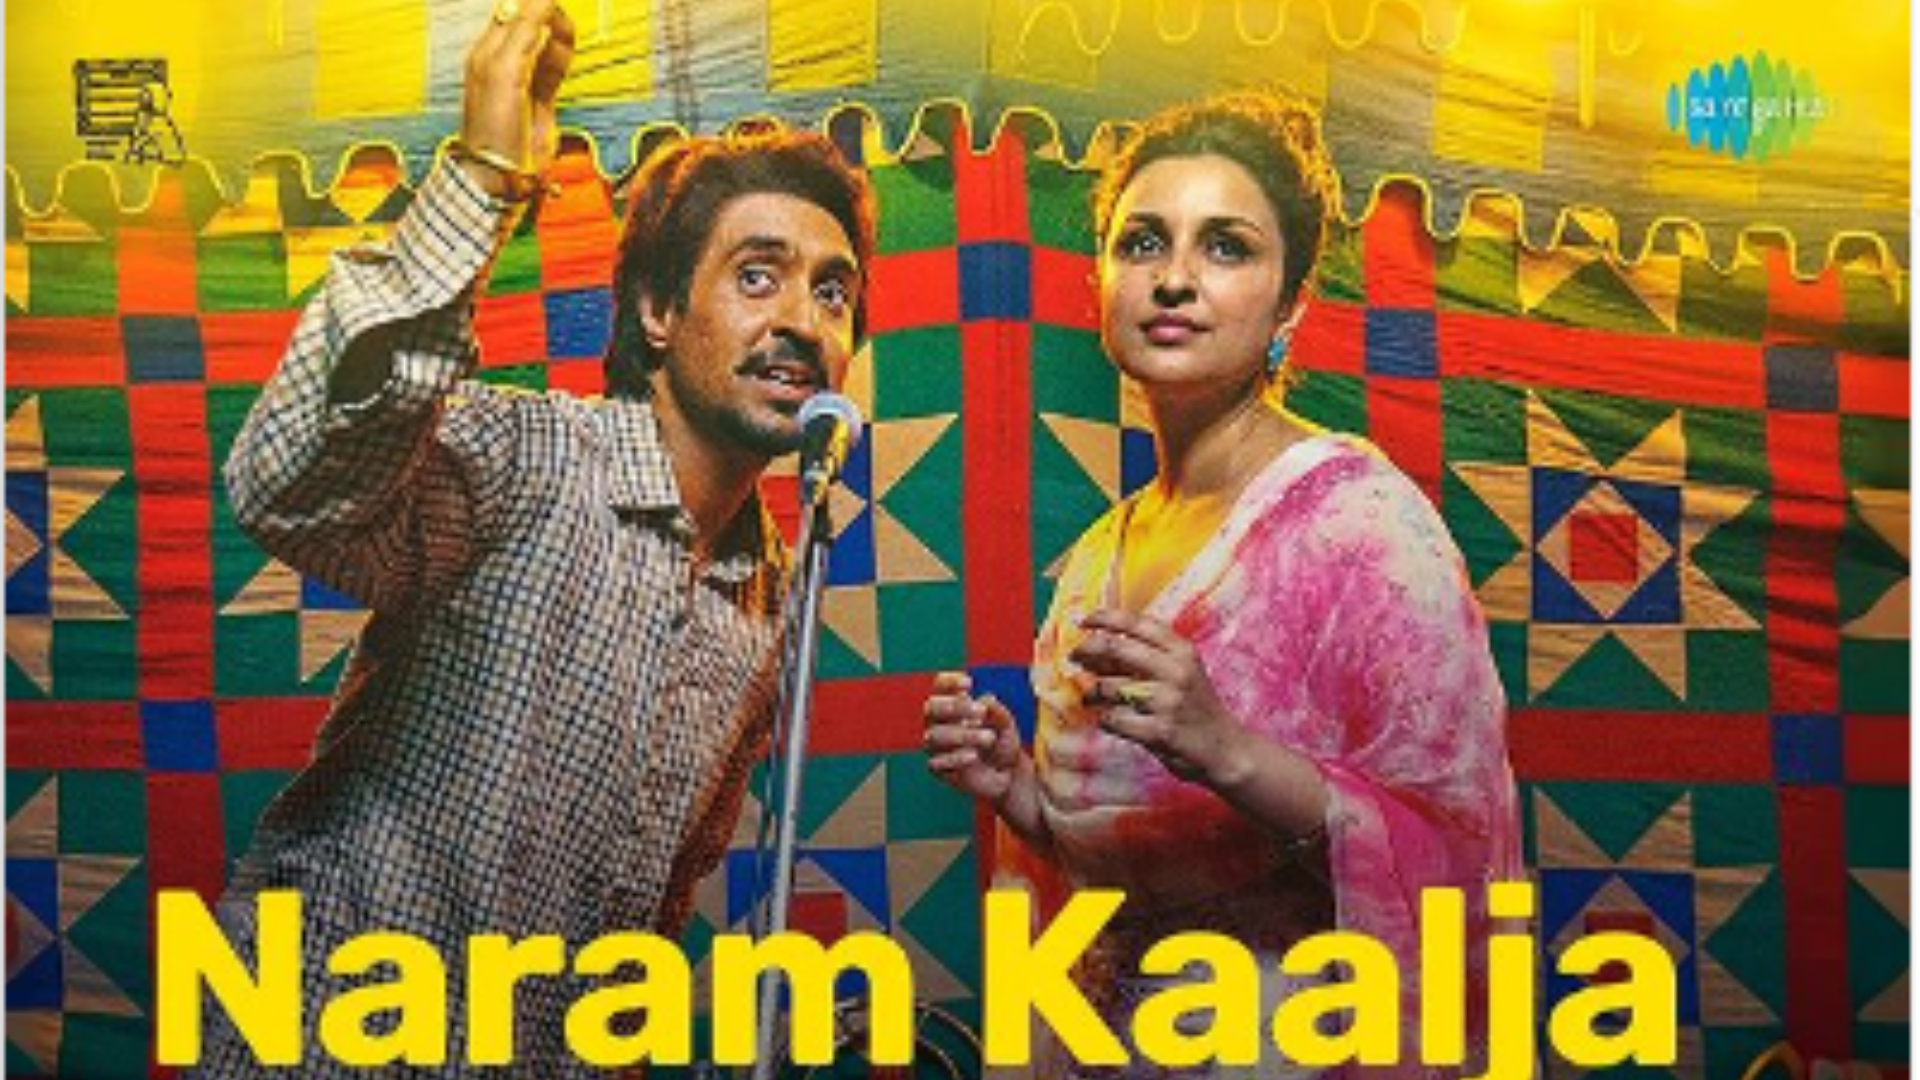 ‘Naram Kaalja’ Song From ‘Amar Singh Chamkila’, Starring Diljit And Parineeti, Released